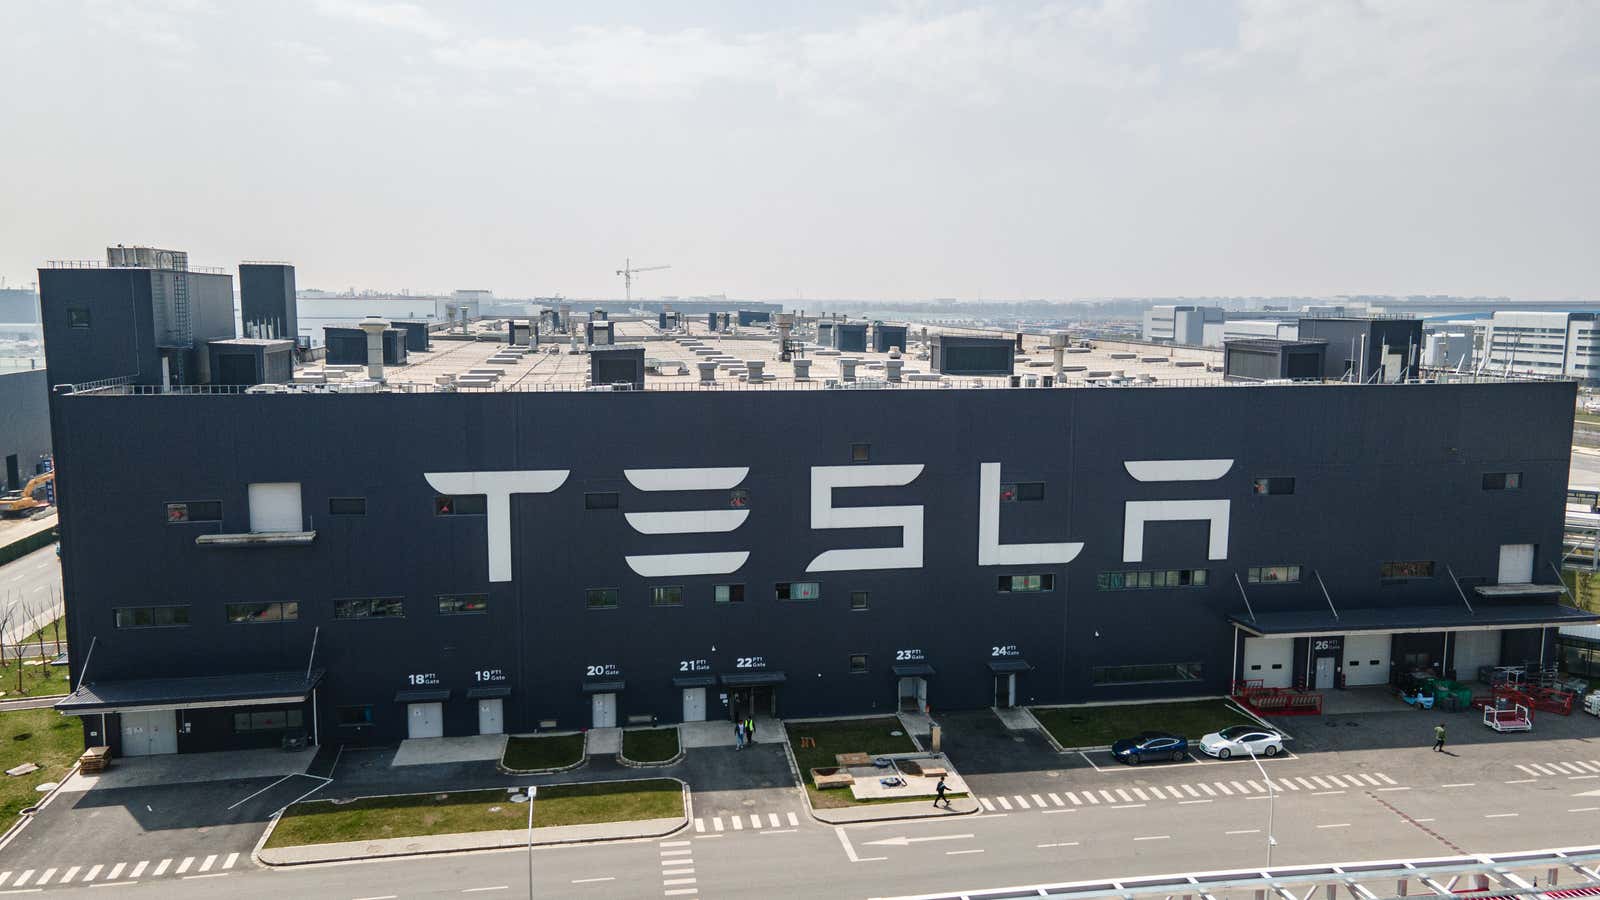 Tesla’s Shanghai Gigafactory